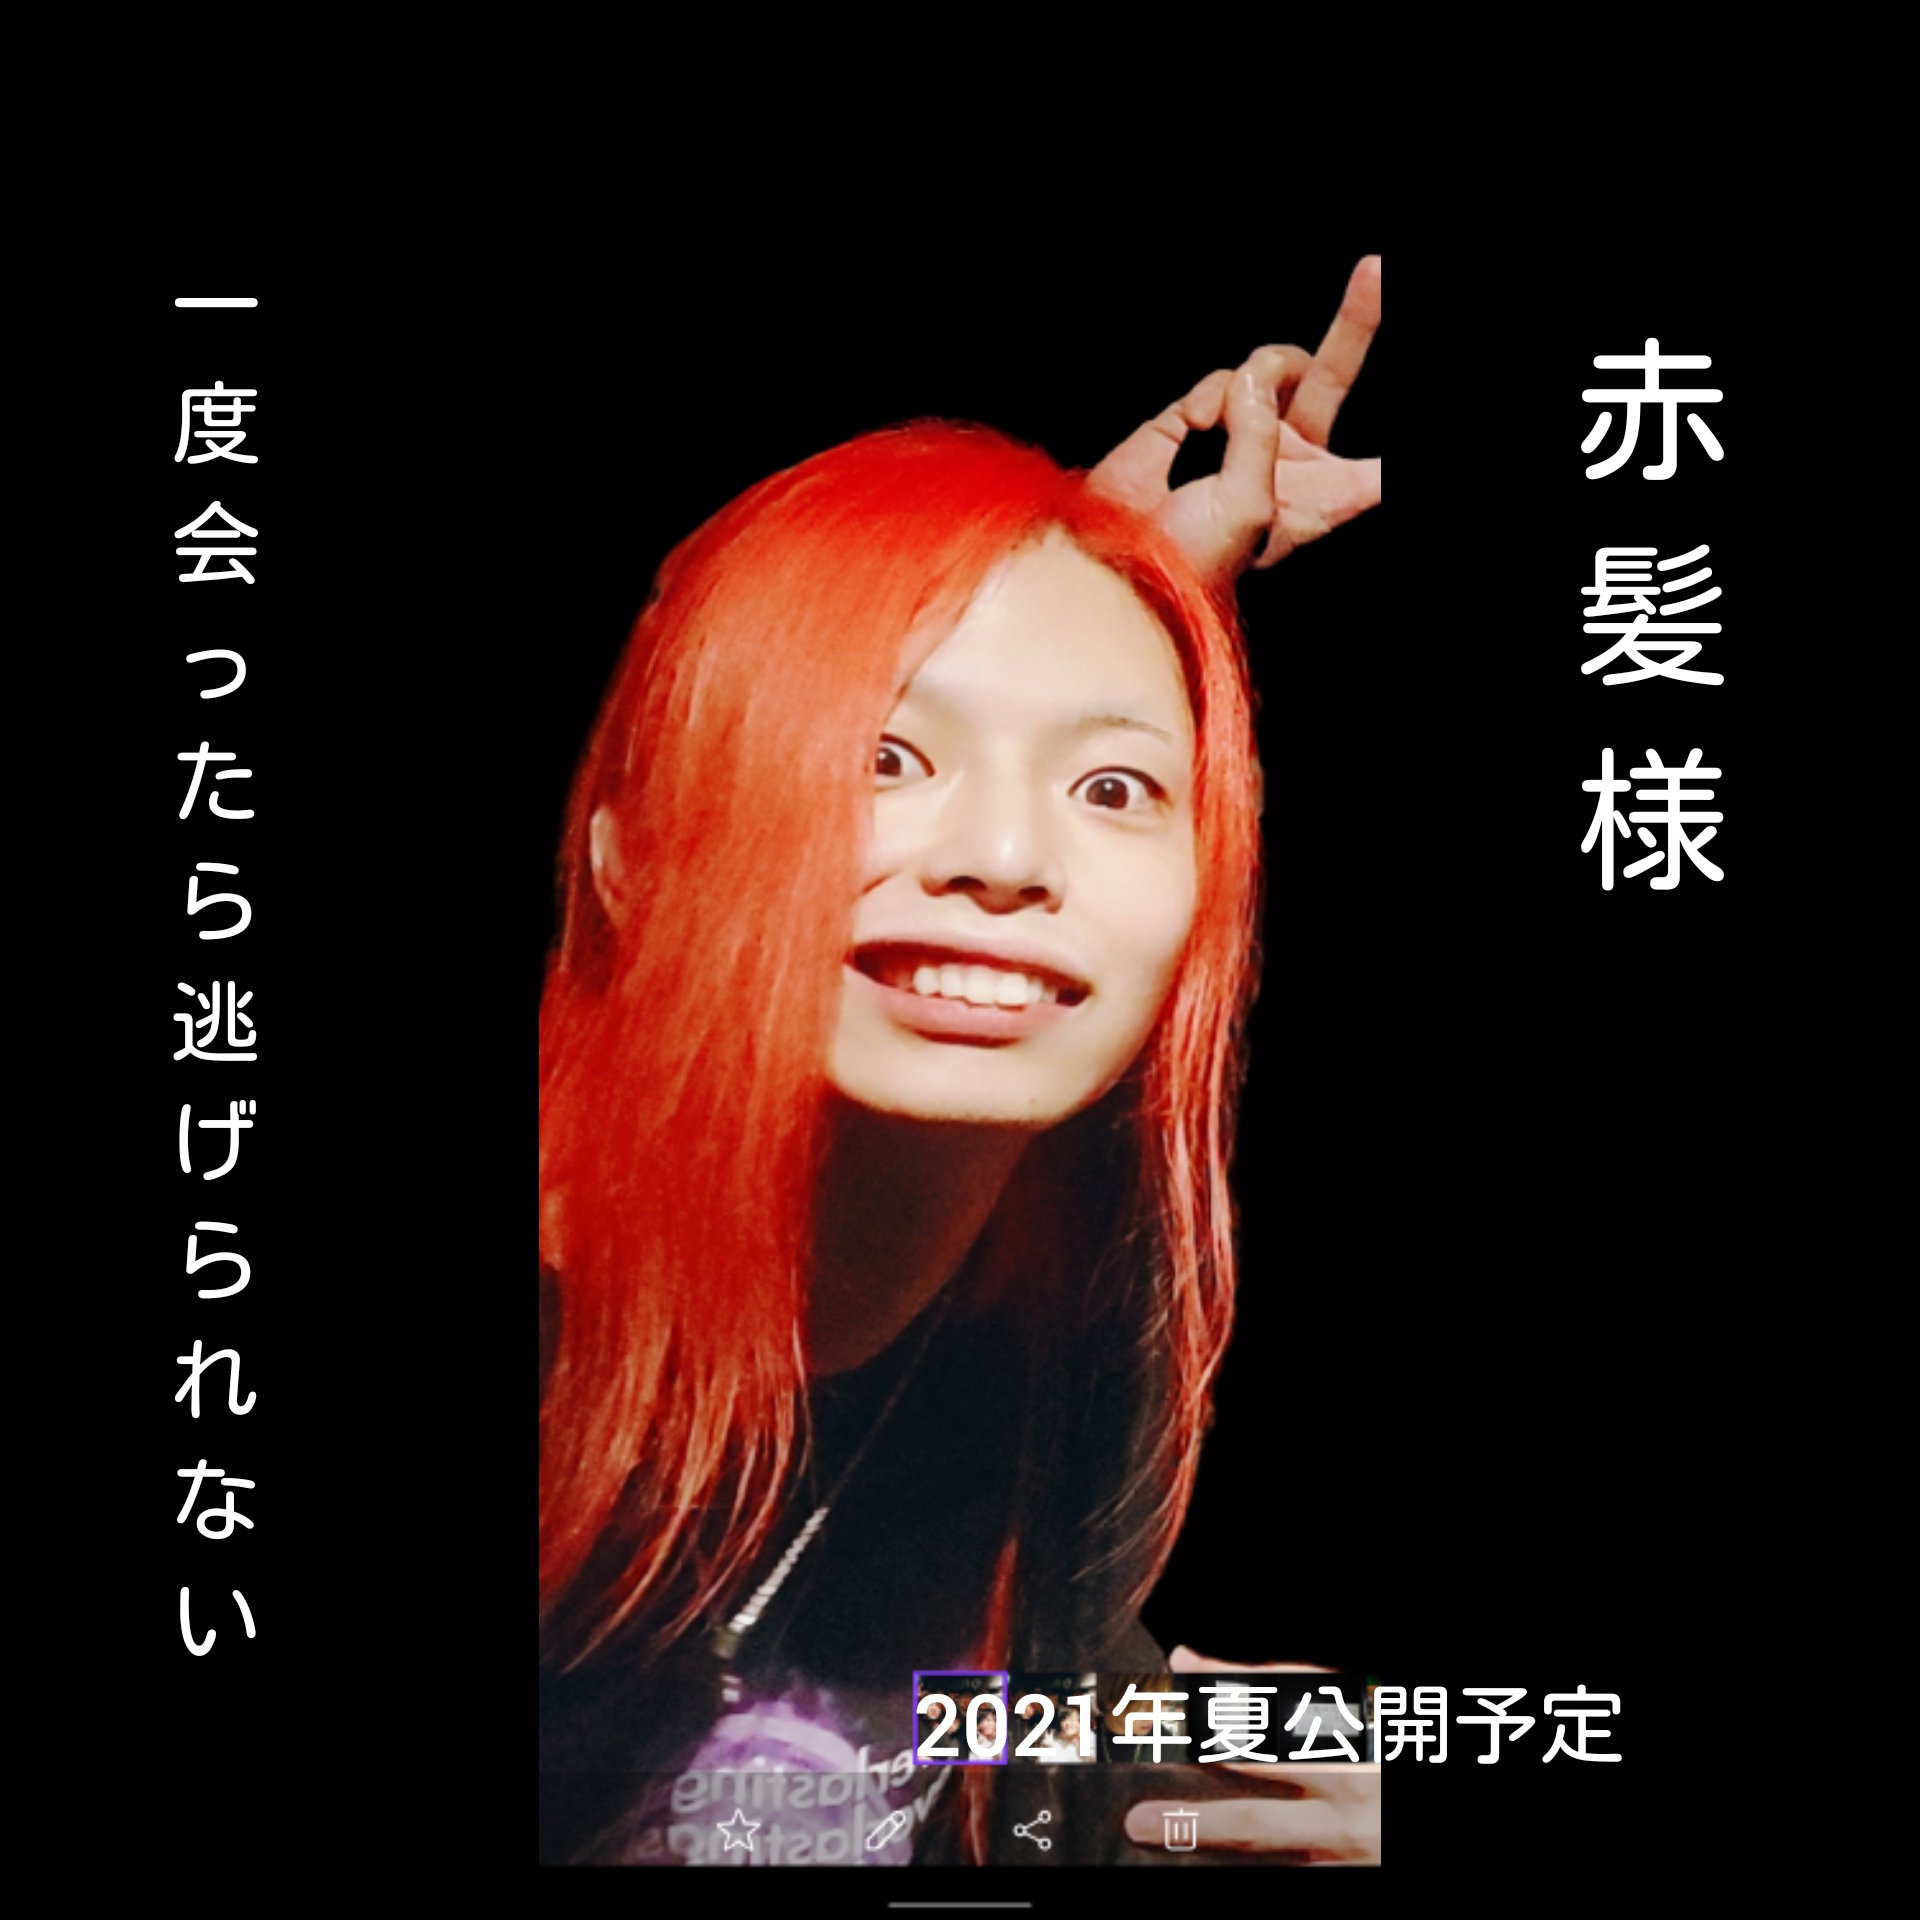 https://bar-rockaholic.jp/shibuya/blog/ElF5ySyUwAc91yS.jpg